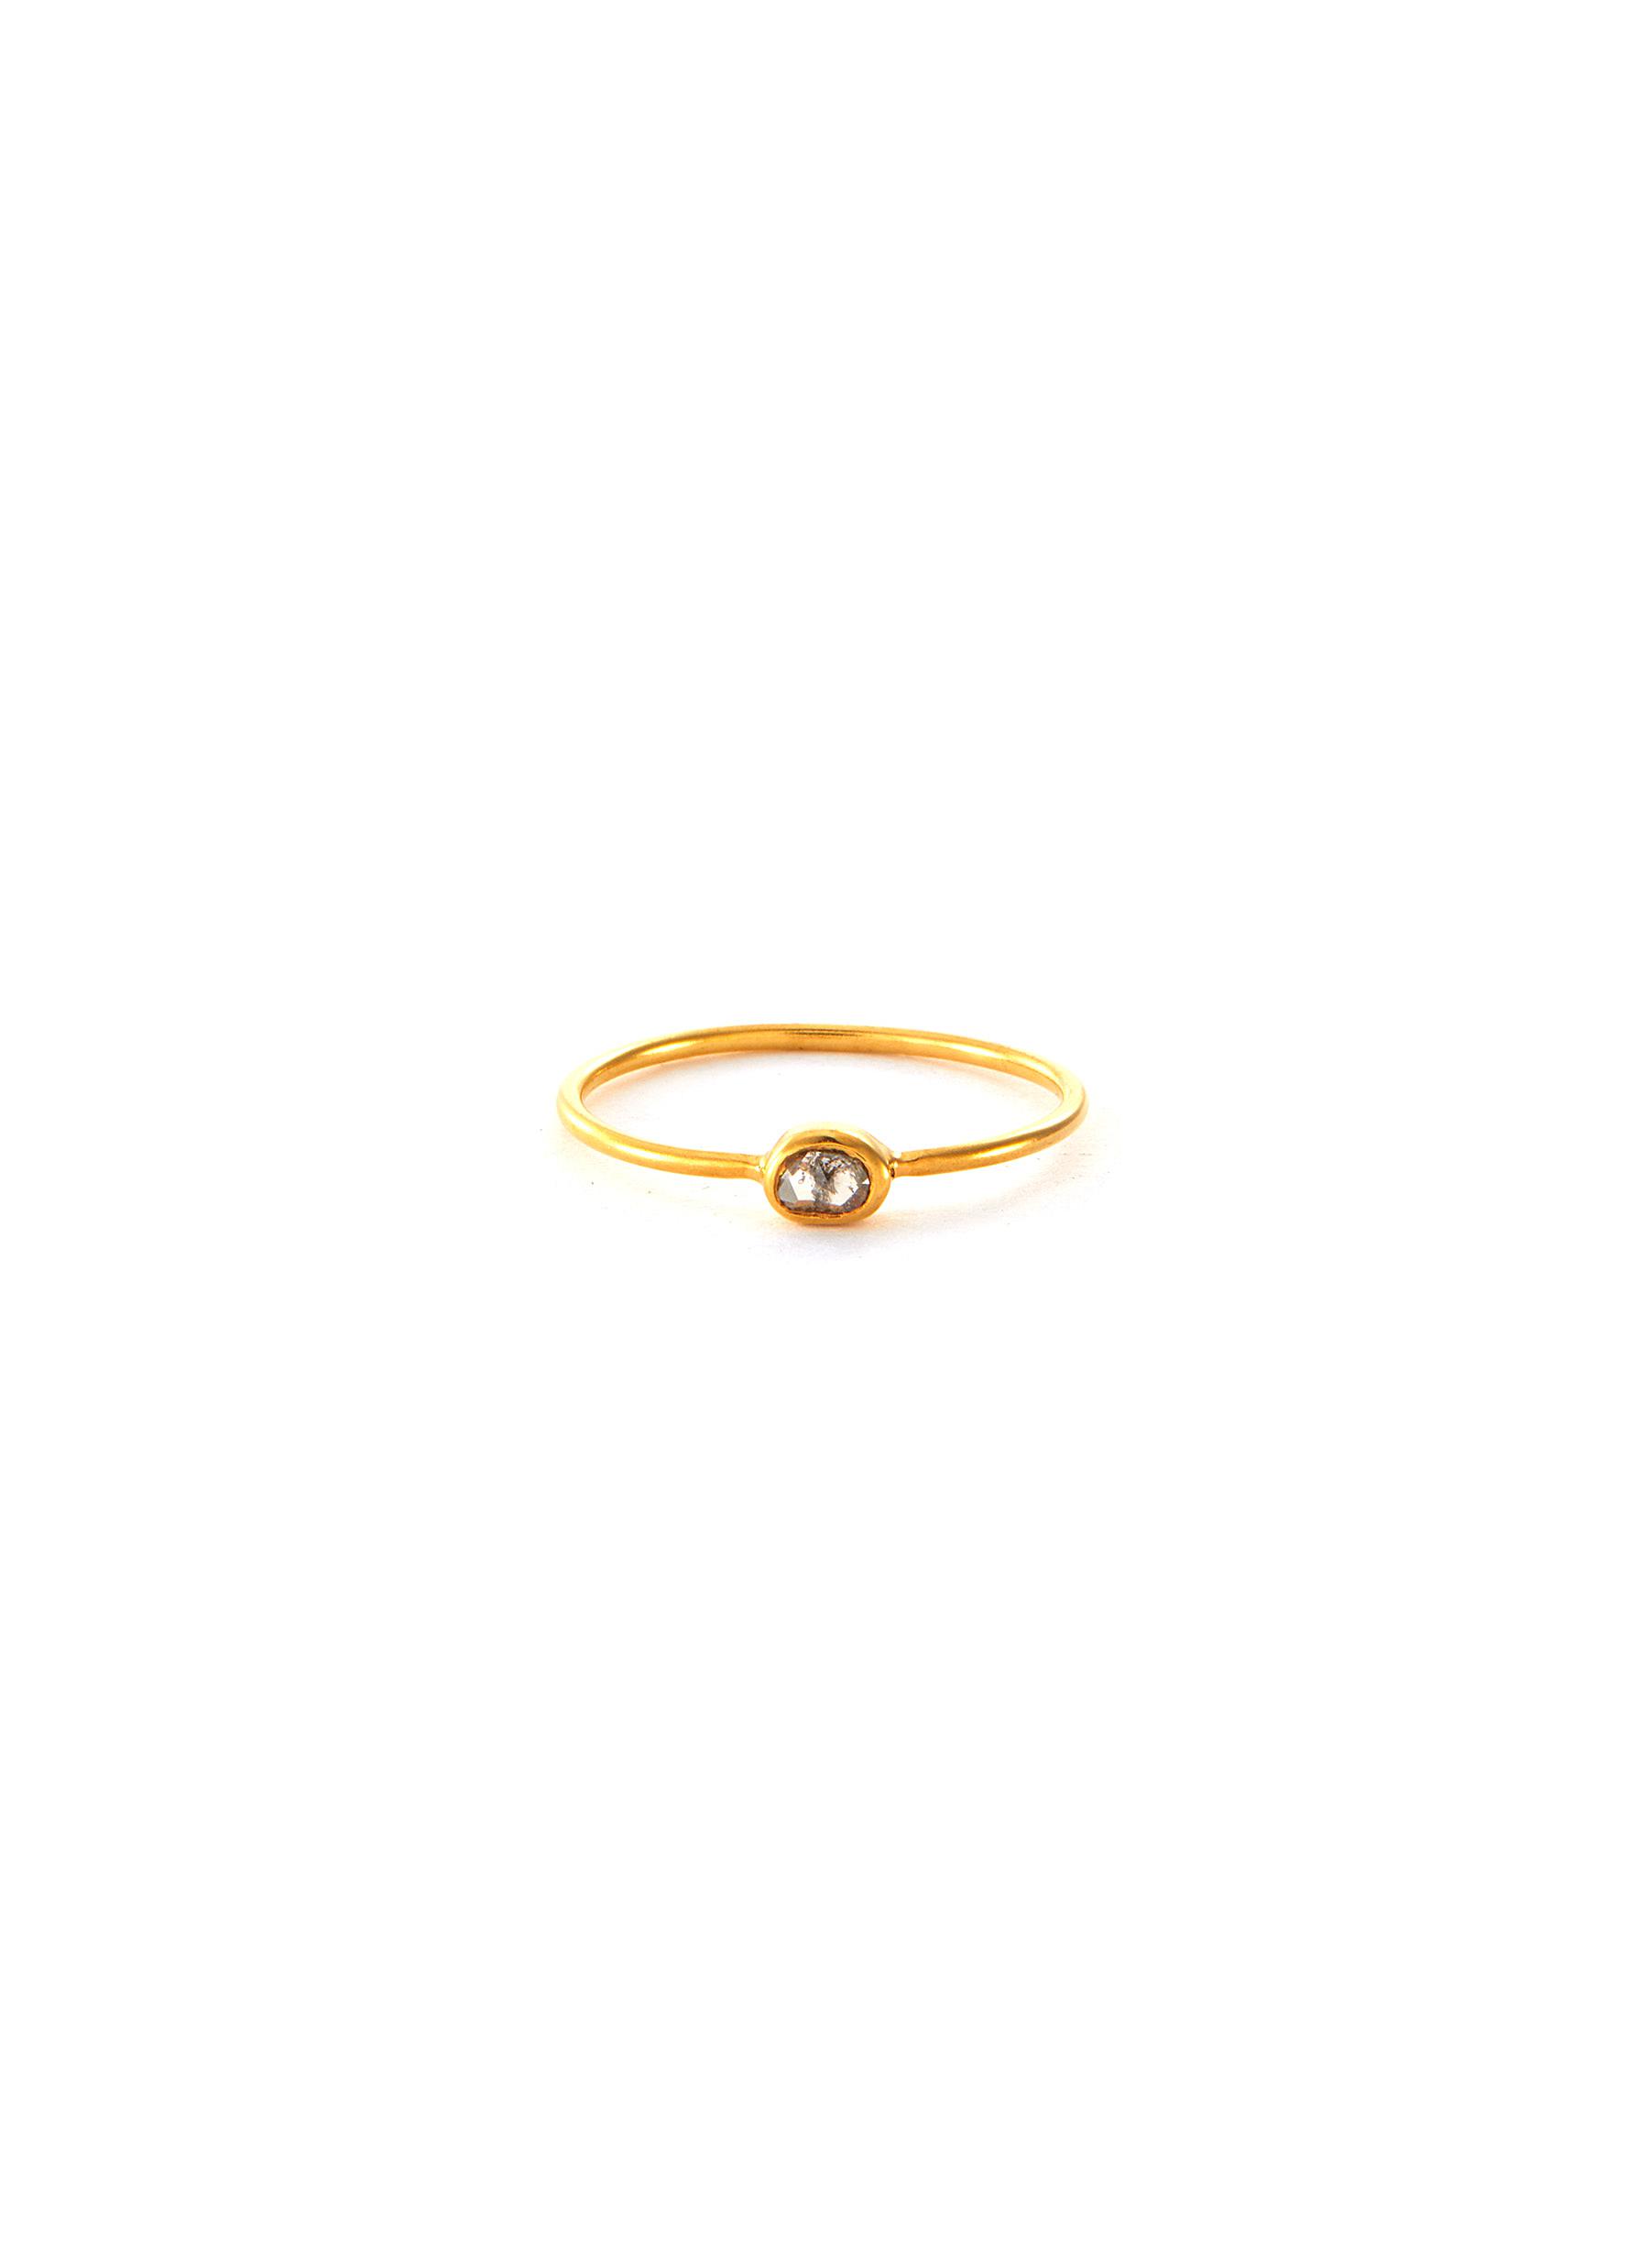 Rose Cut Diamond 18k gold vermeil ring